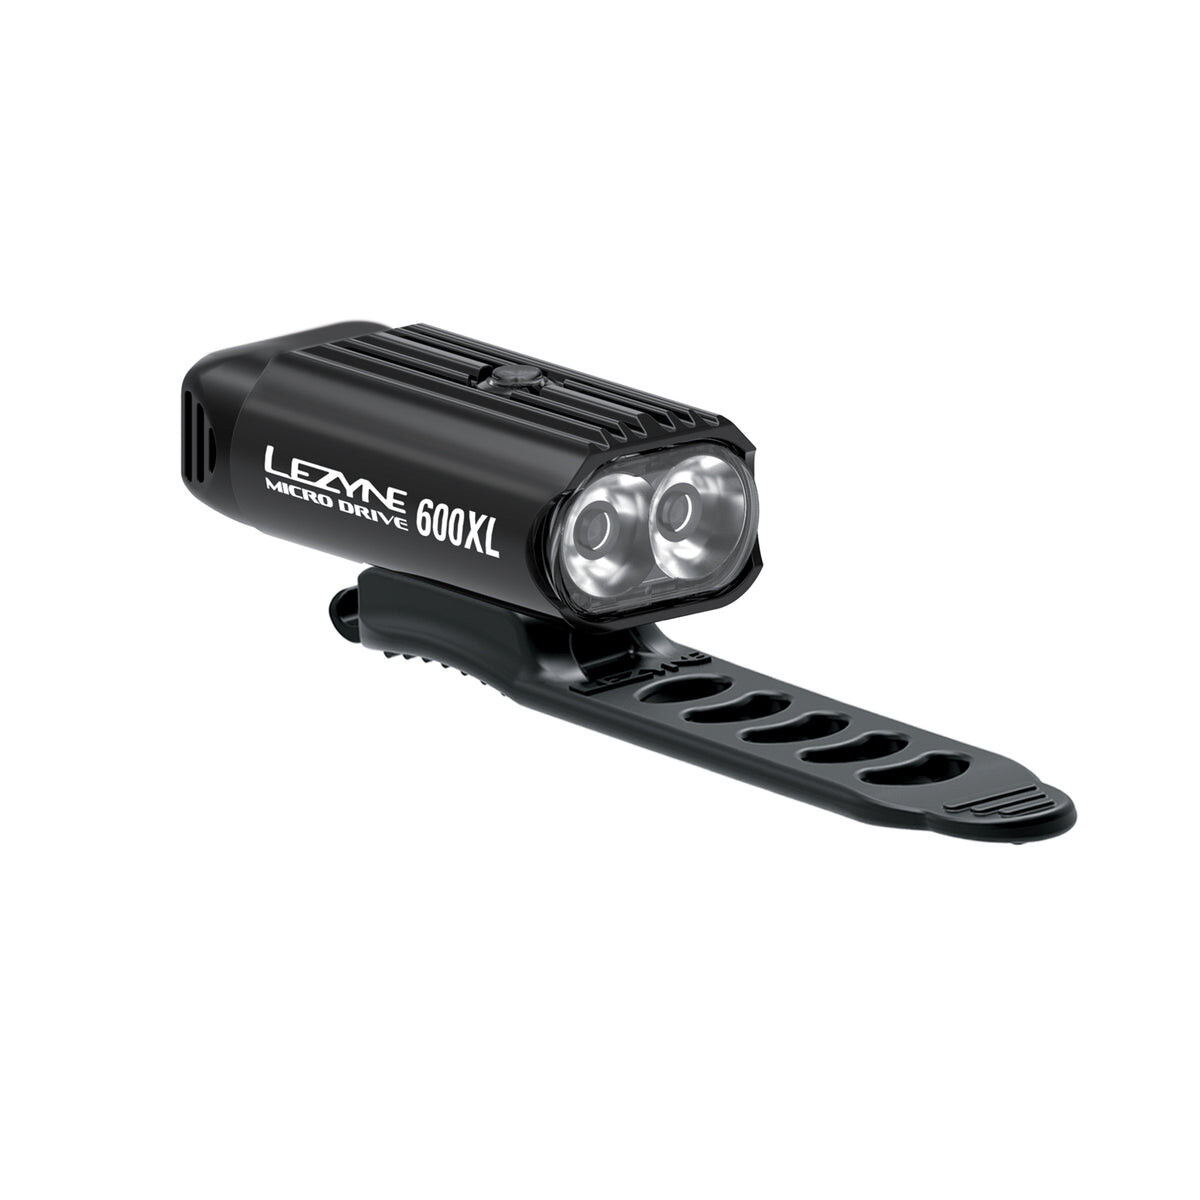 Lezyne Micro Drive 600XL - Polkupyörän lamppusarja | Hardloop